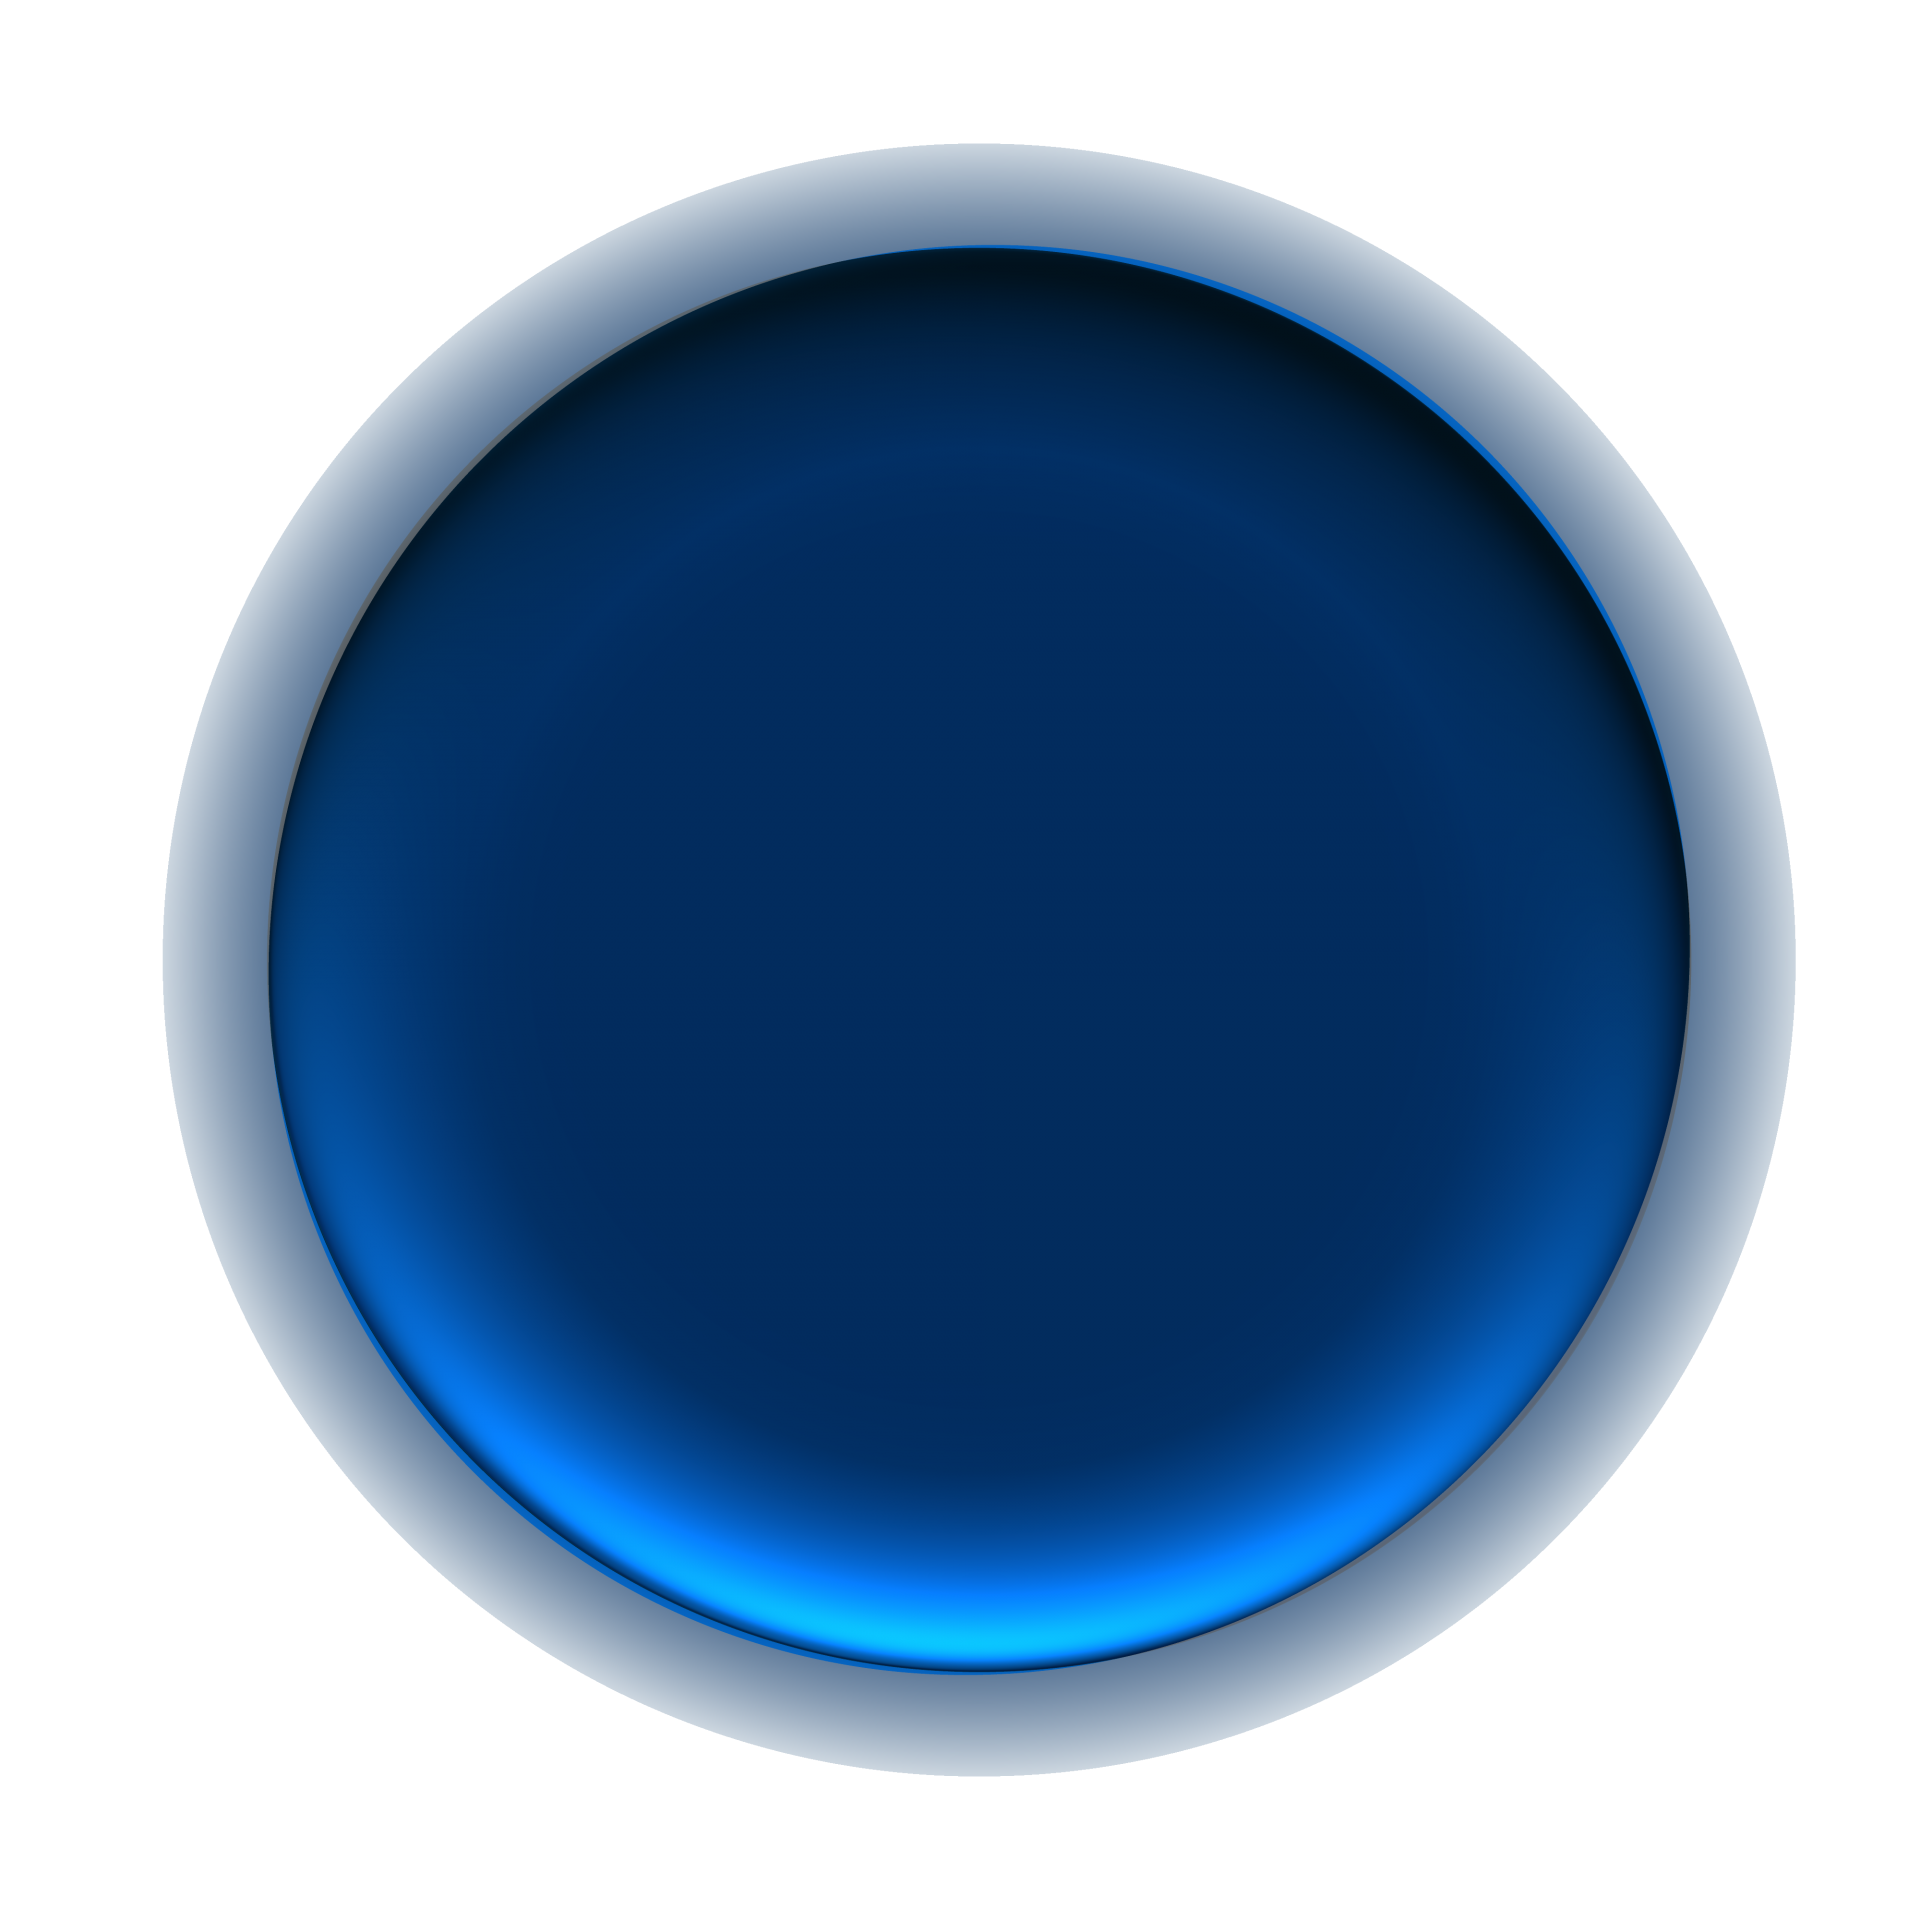 Botón azul imagen PNG HD